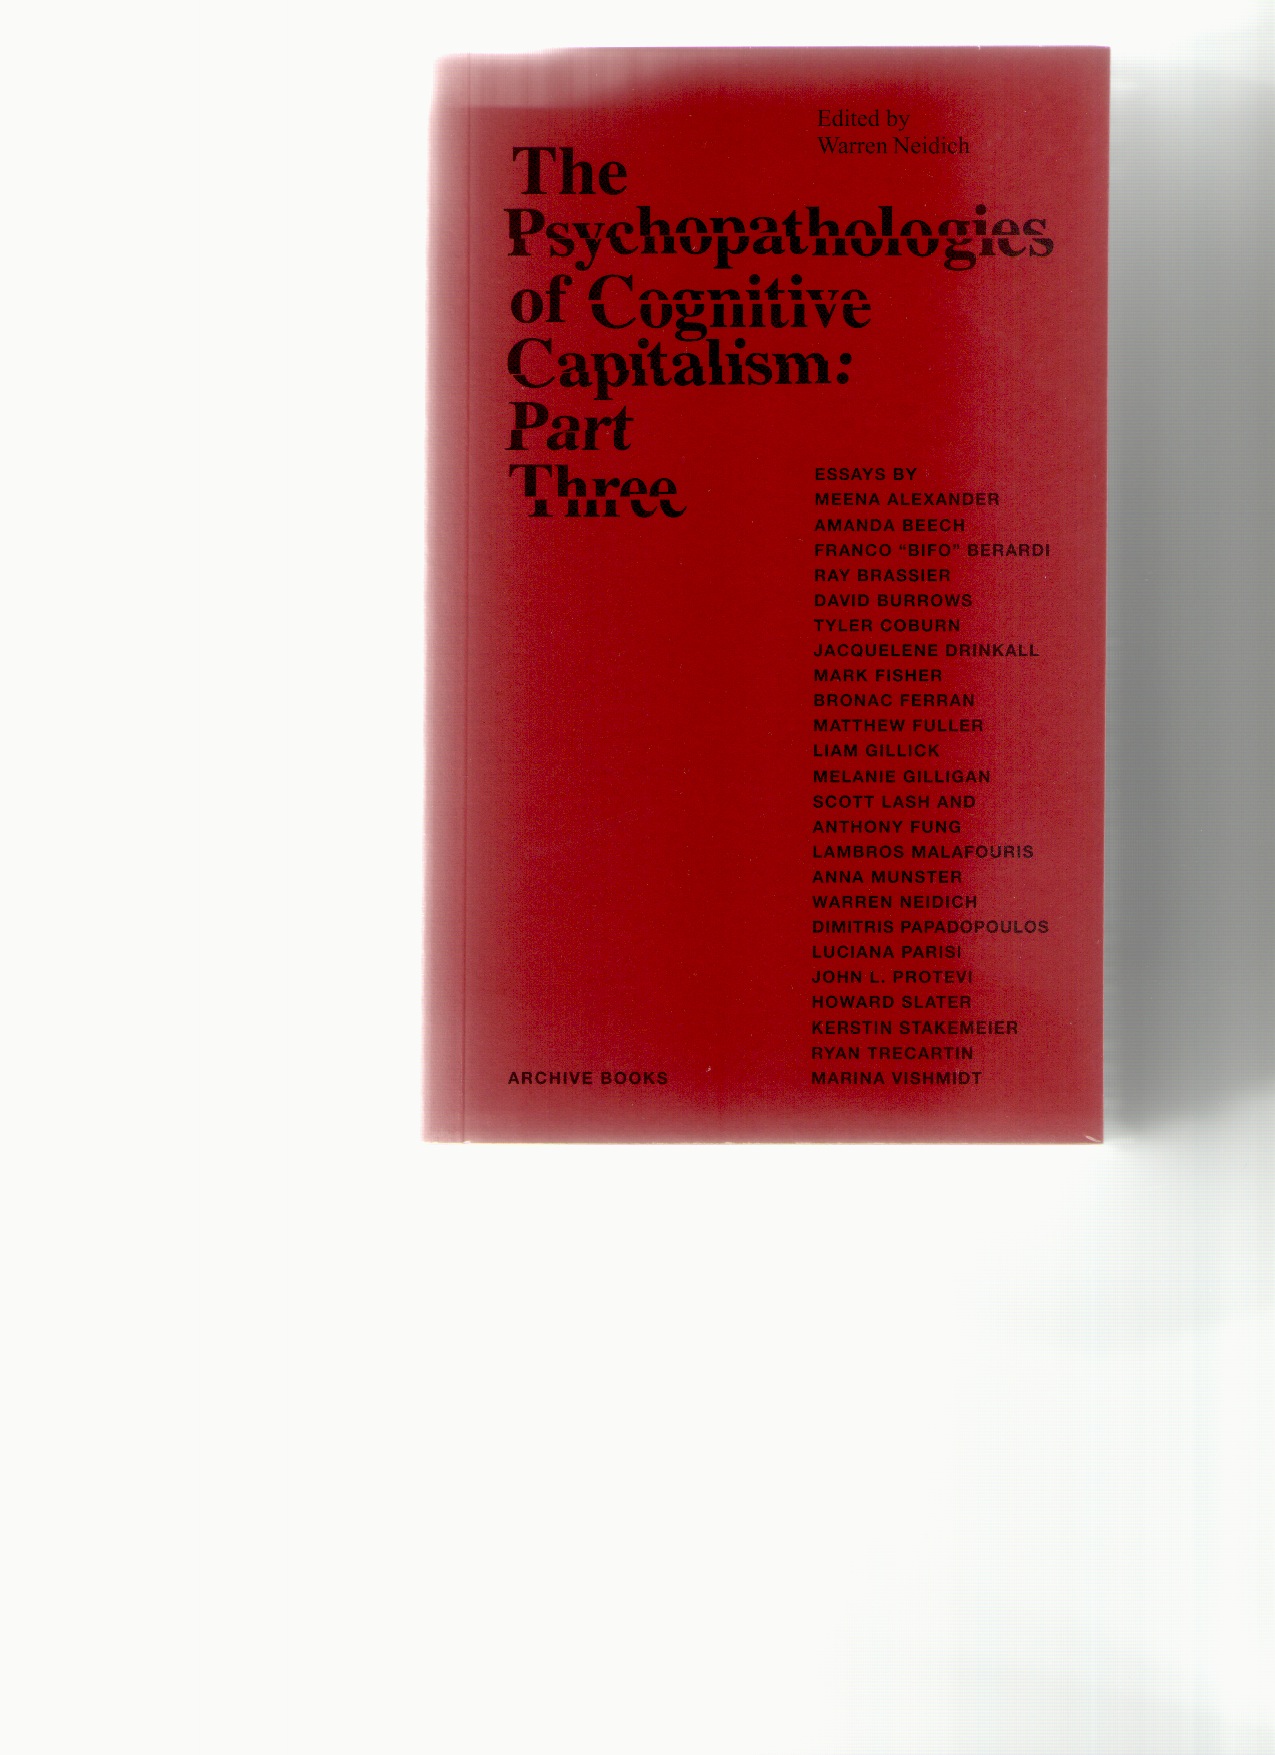 NEIDICH, Warren (ed.) - The Psychopathologies of Cognitive Capitalism. Part Three